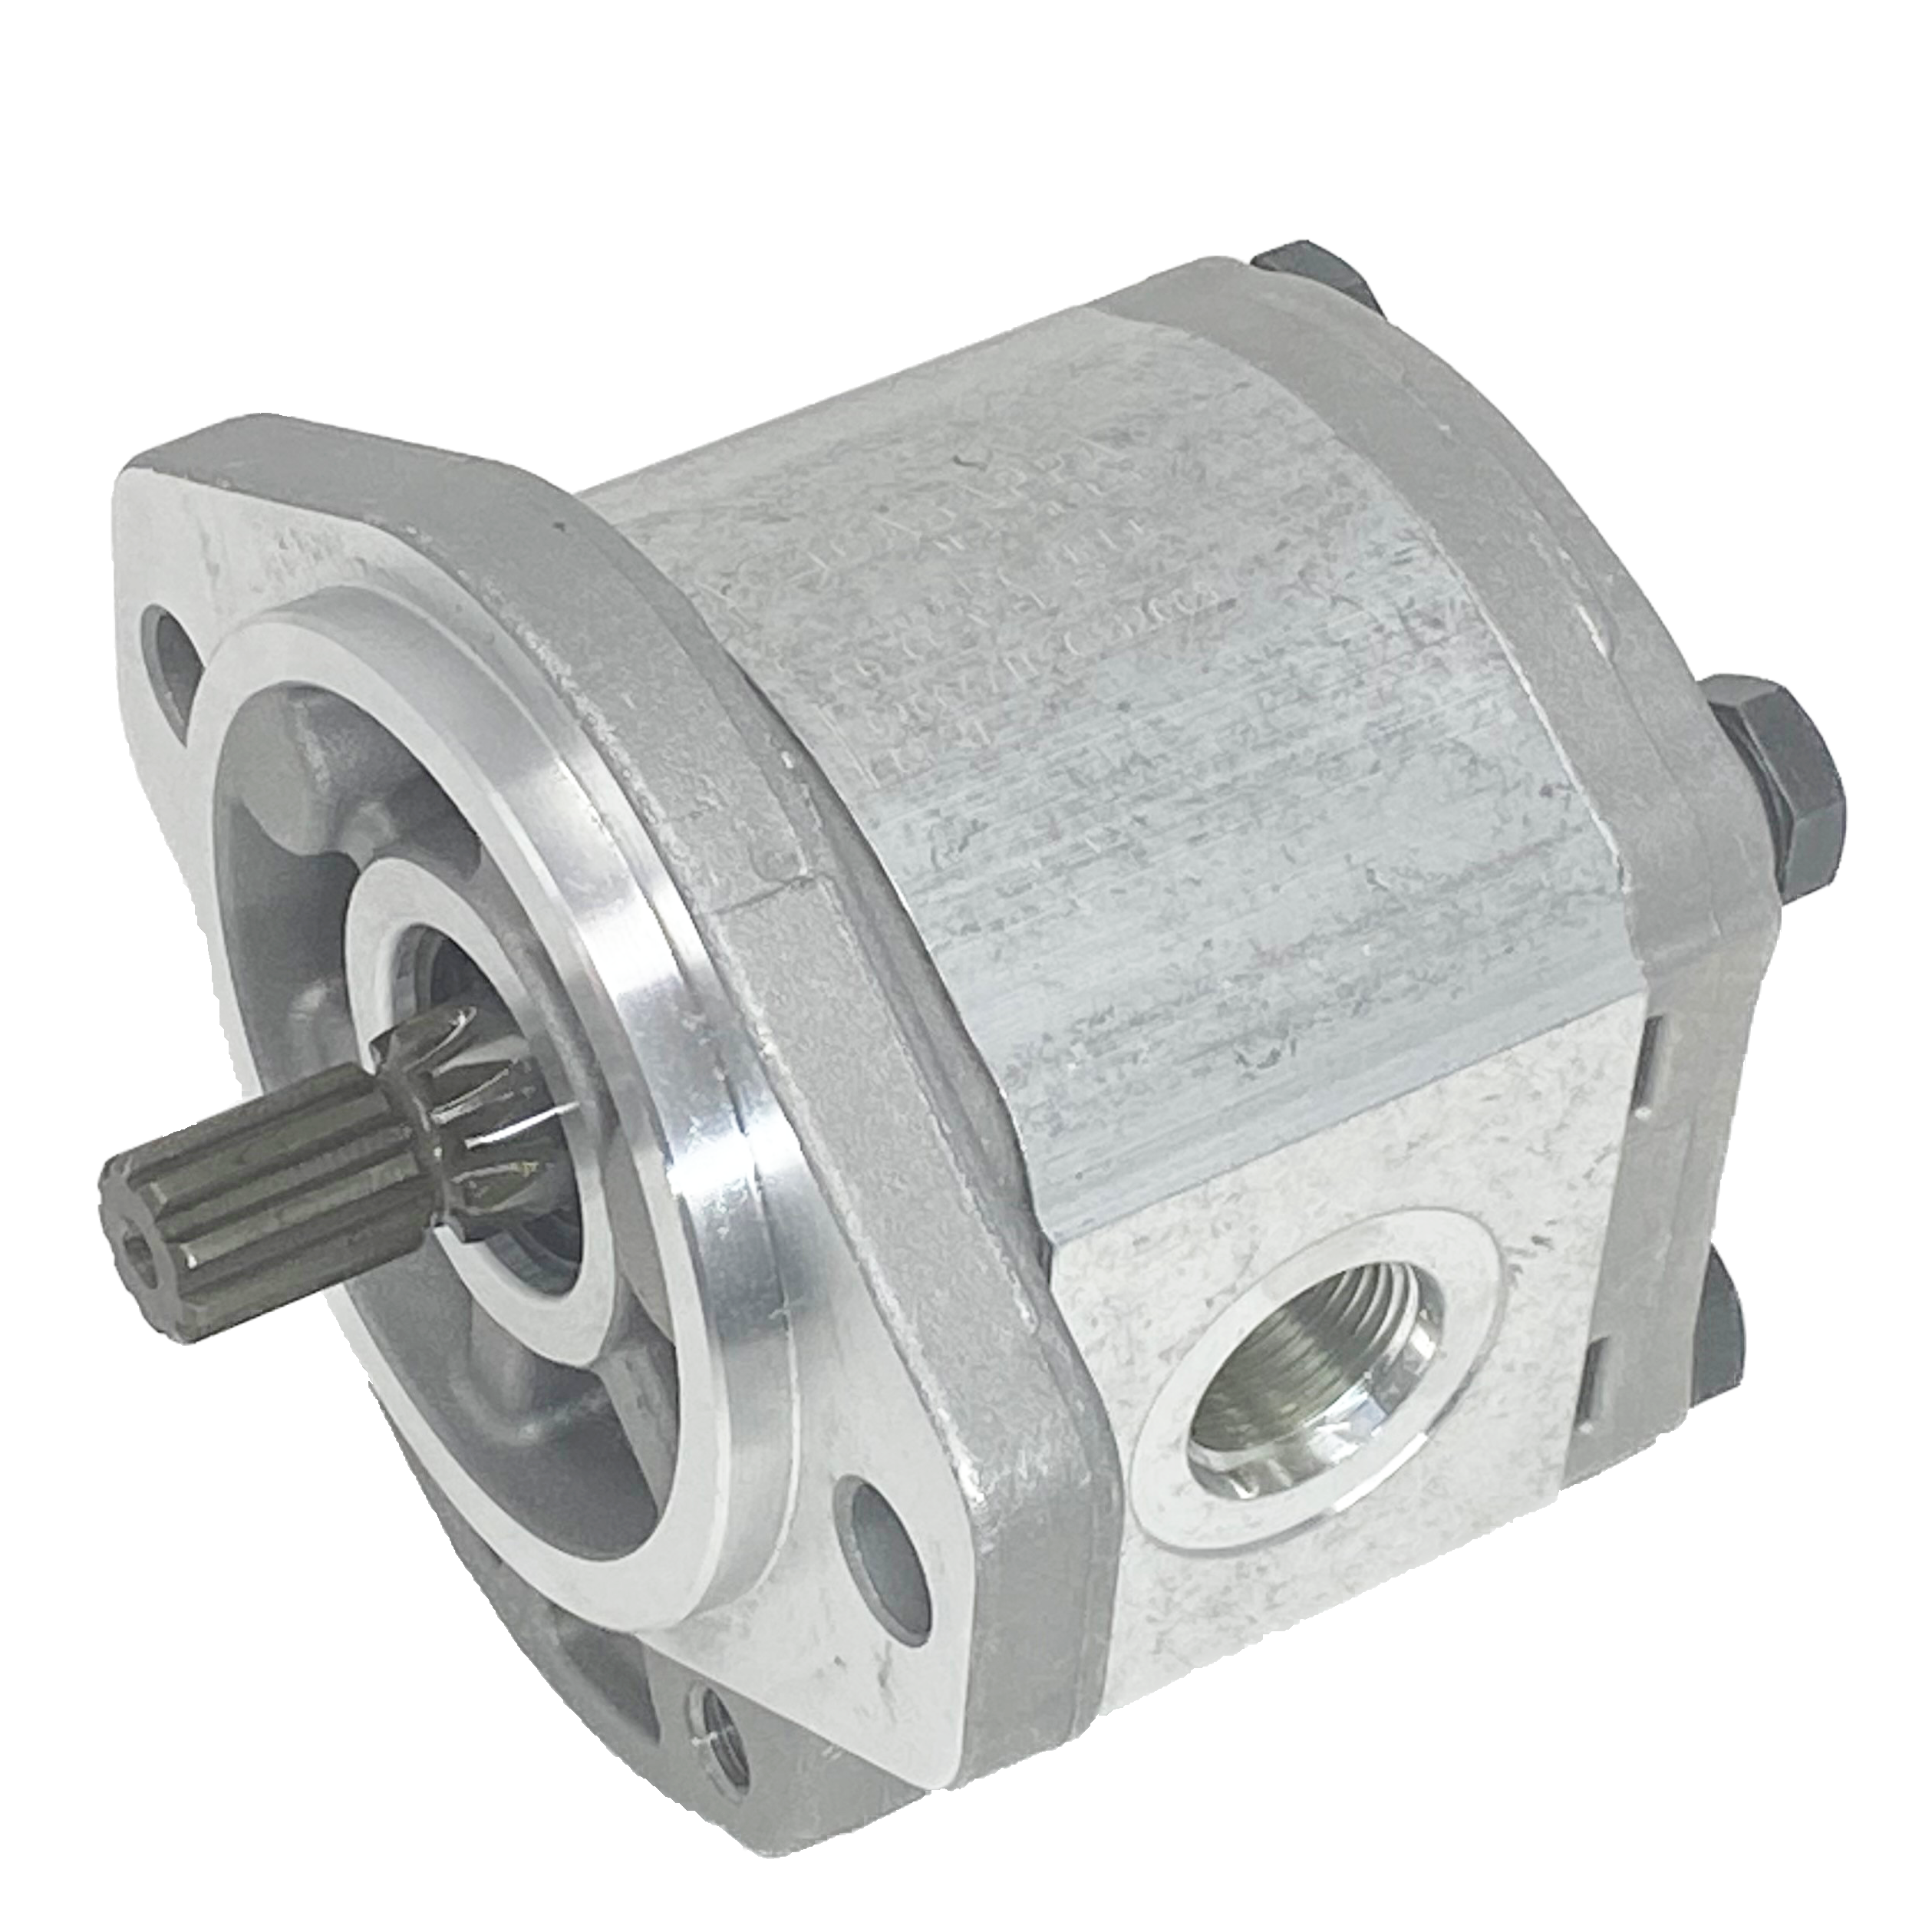 PLM20.11,2R0-03S1-LOC/OC-N-EL : Casappa Polaris Gear Motor, 11.23cc, 3625psi Rated, 3500RPM, Reversible Rear External Drain, 9T 16/32dp Shaft, SAE A 2-Bolt Flange, 0.625 (5/8") #10 SAE Inlet, 0.625 (5/8") #10 SAE Outlet, Aluminum Body & Flange